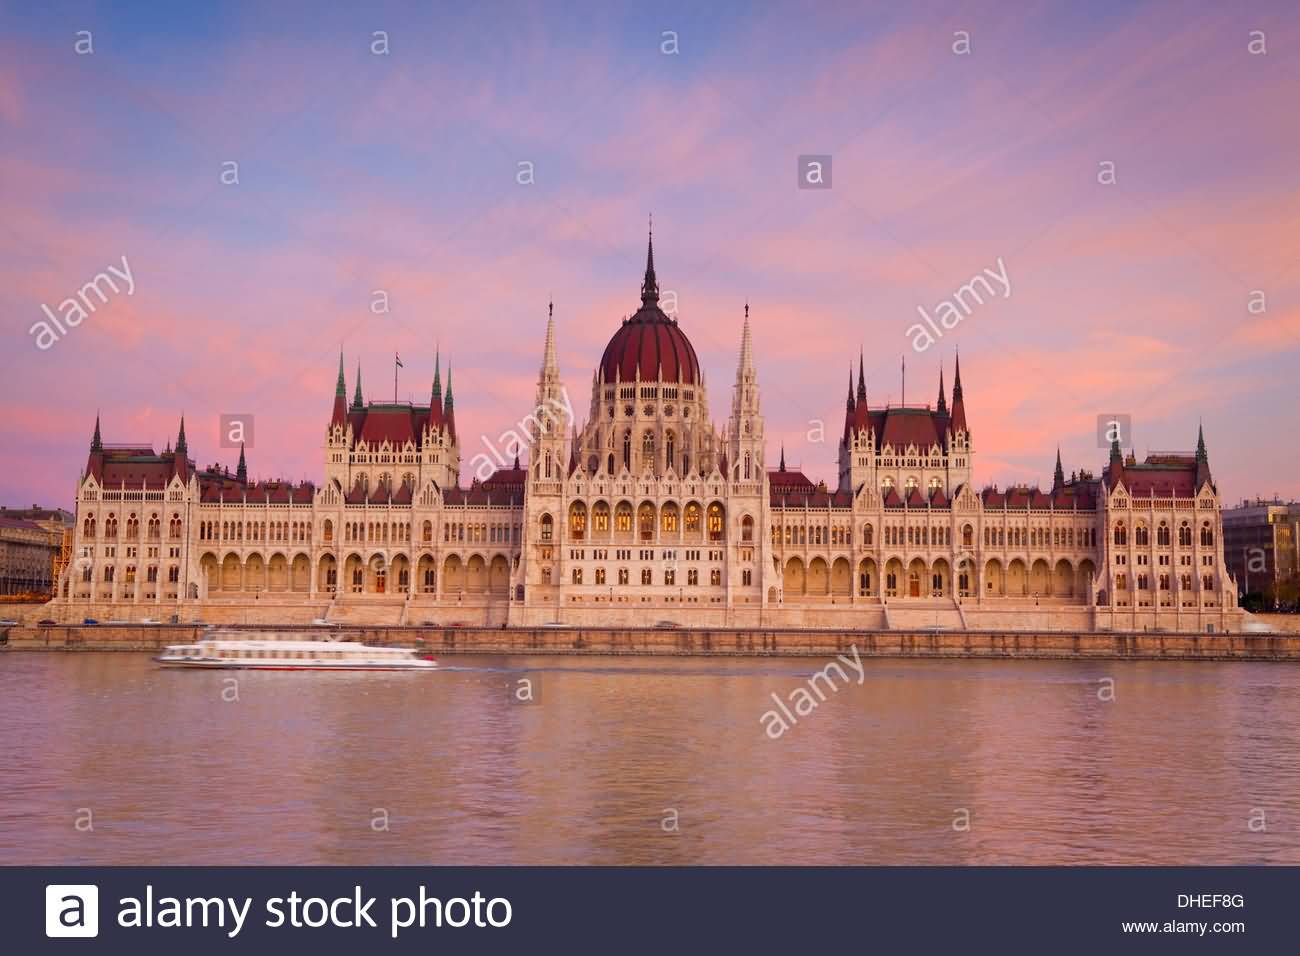 Hungarian Parliament Building And River Danube At Sunset